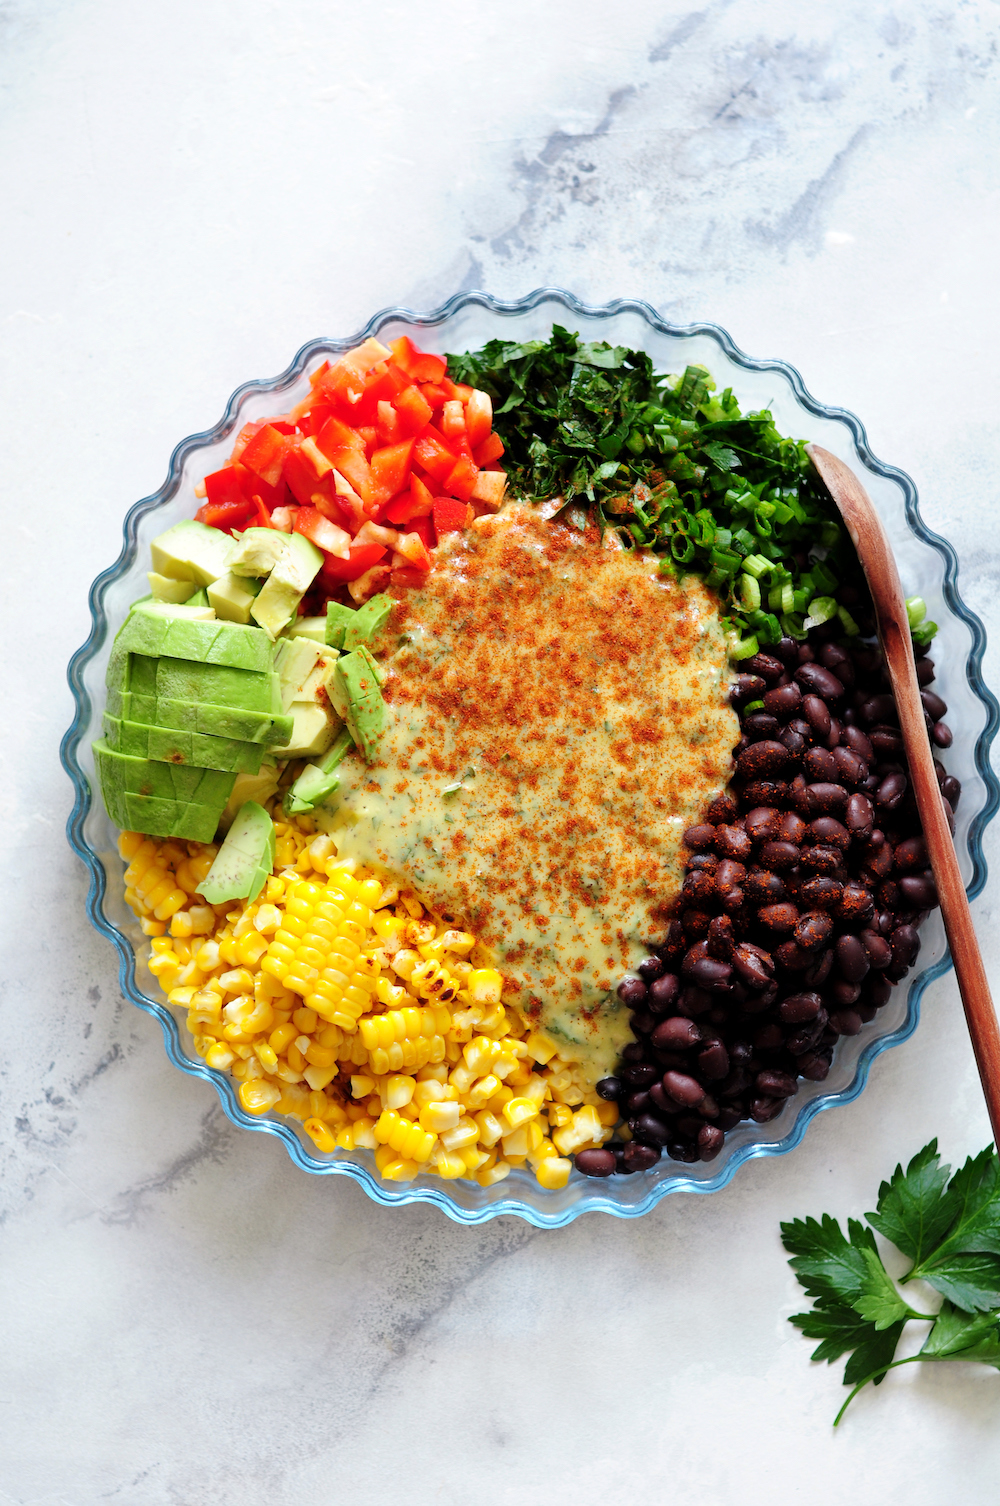 Corn and Black Bean Salad ingredients with garlic lemon aioli on top